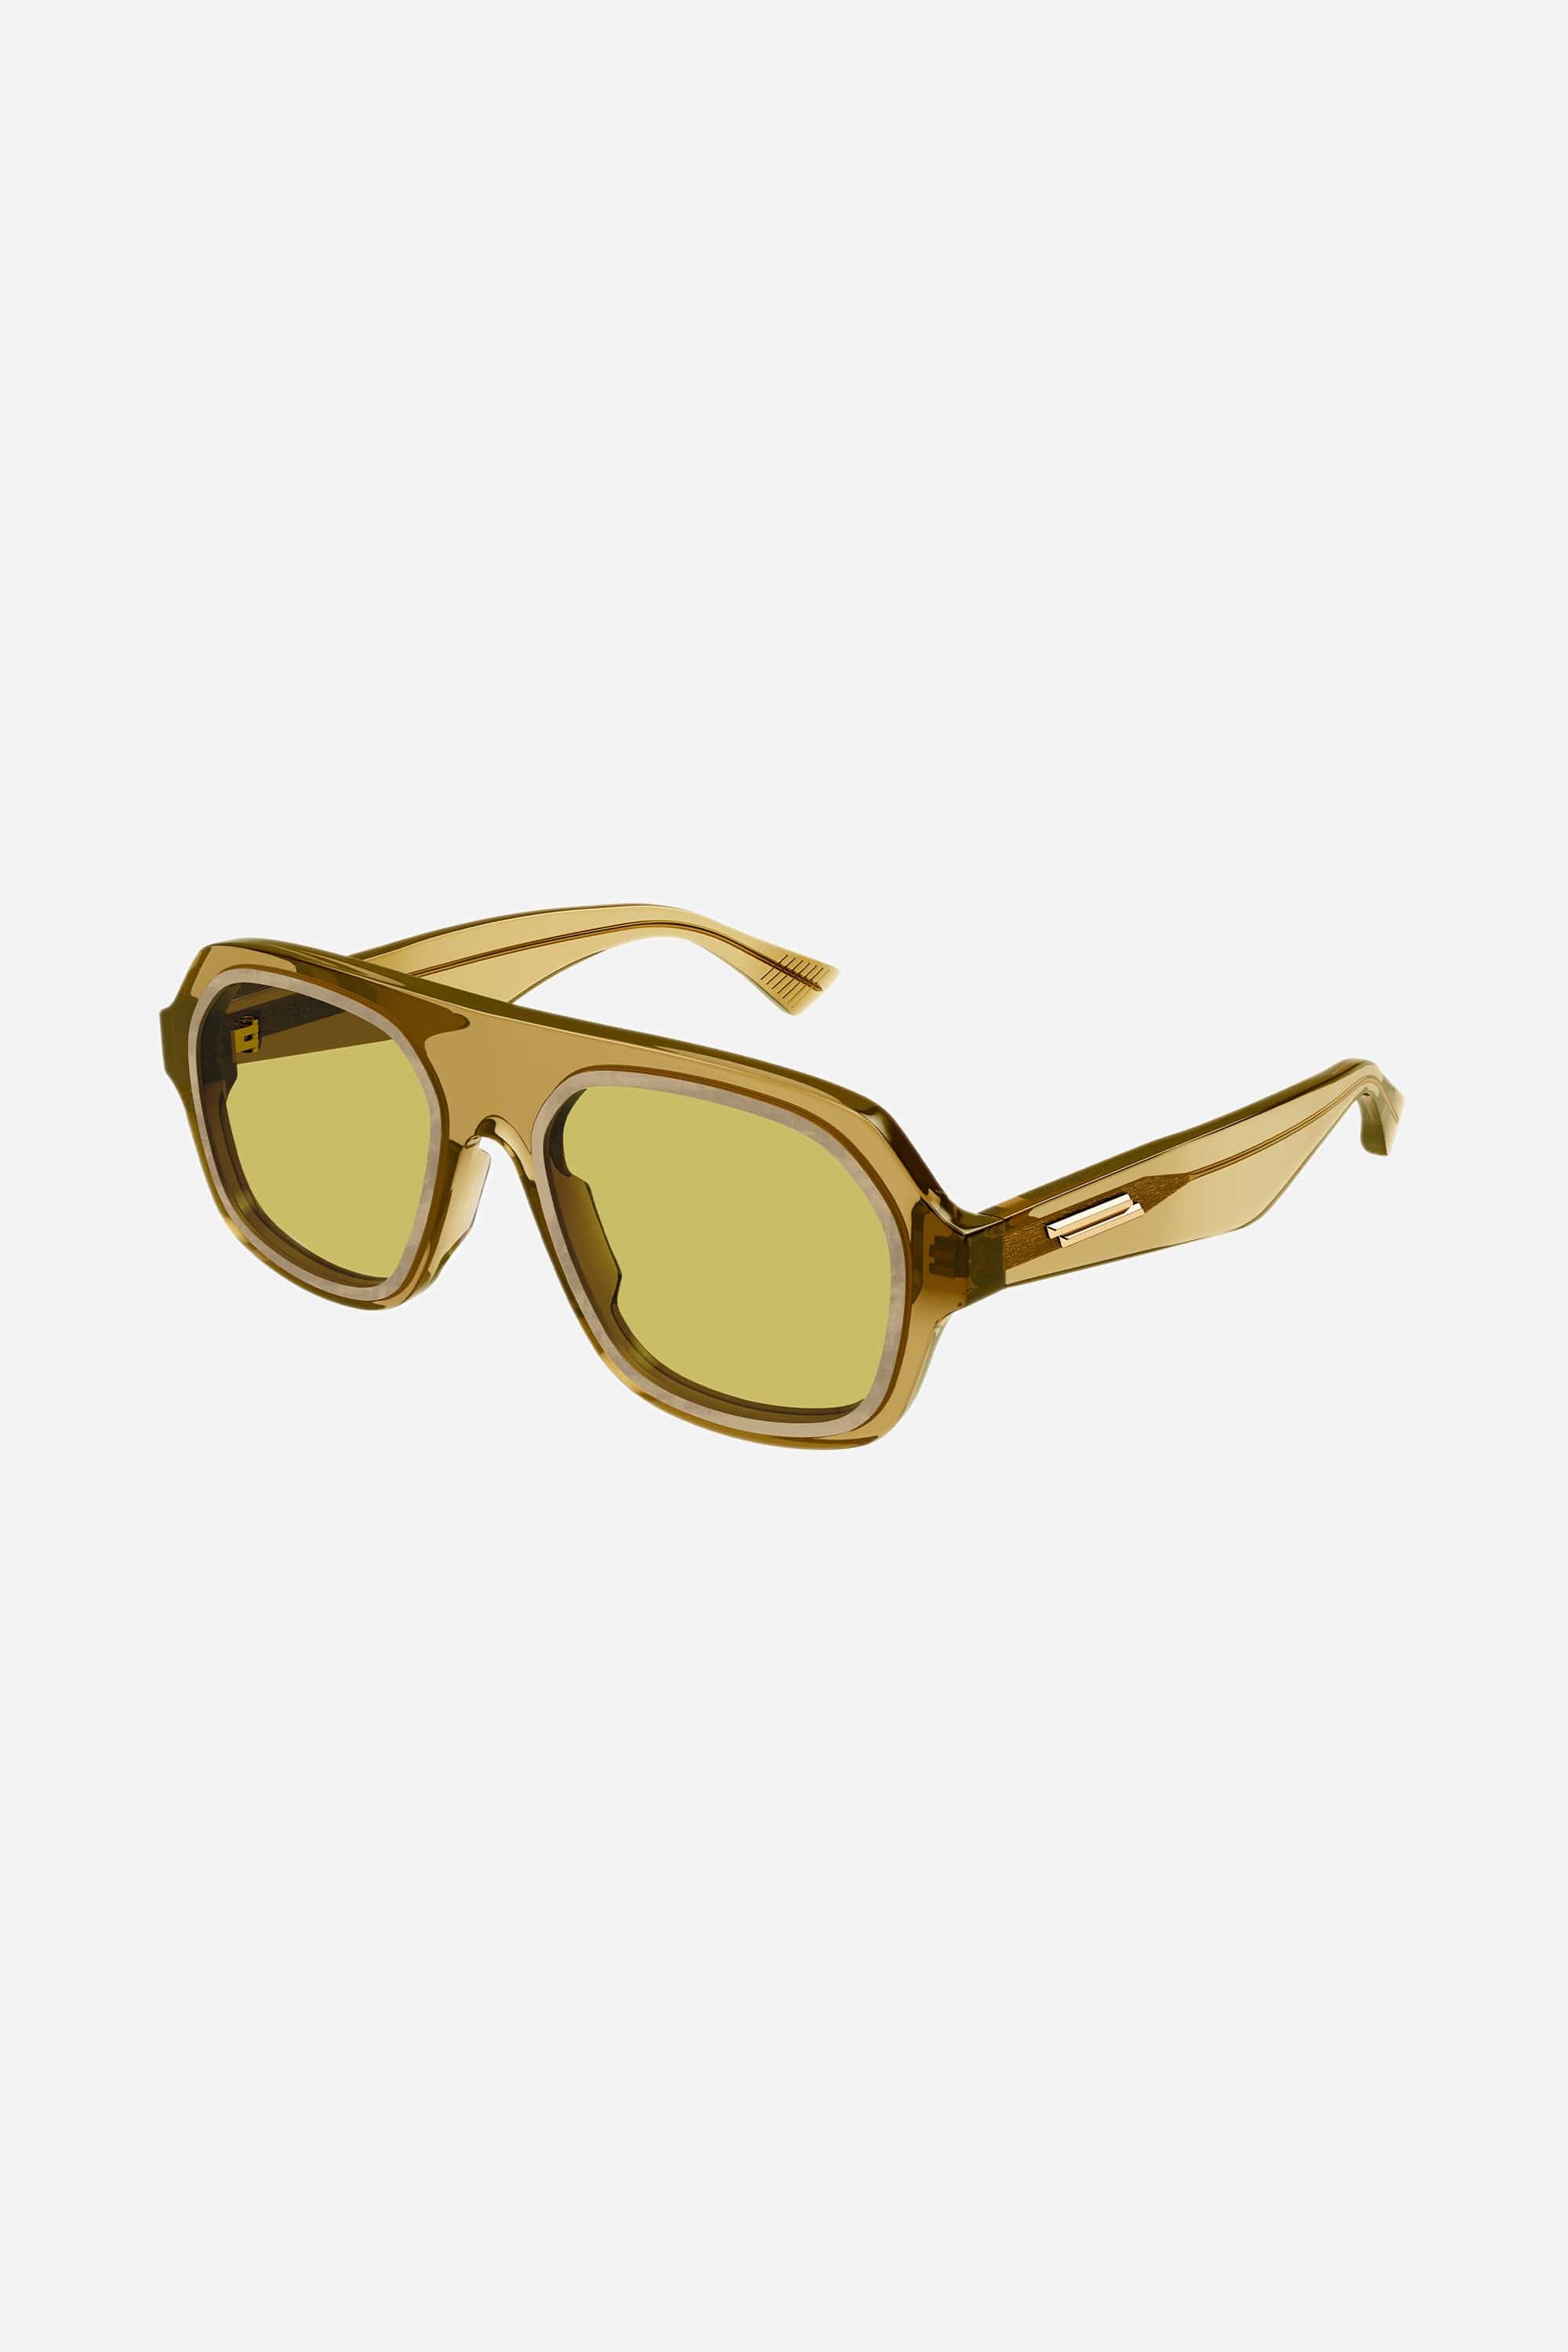 Bottega Veneta caravan yellow sunglasses - Eyewear Club